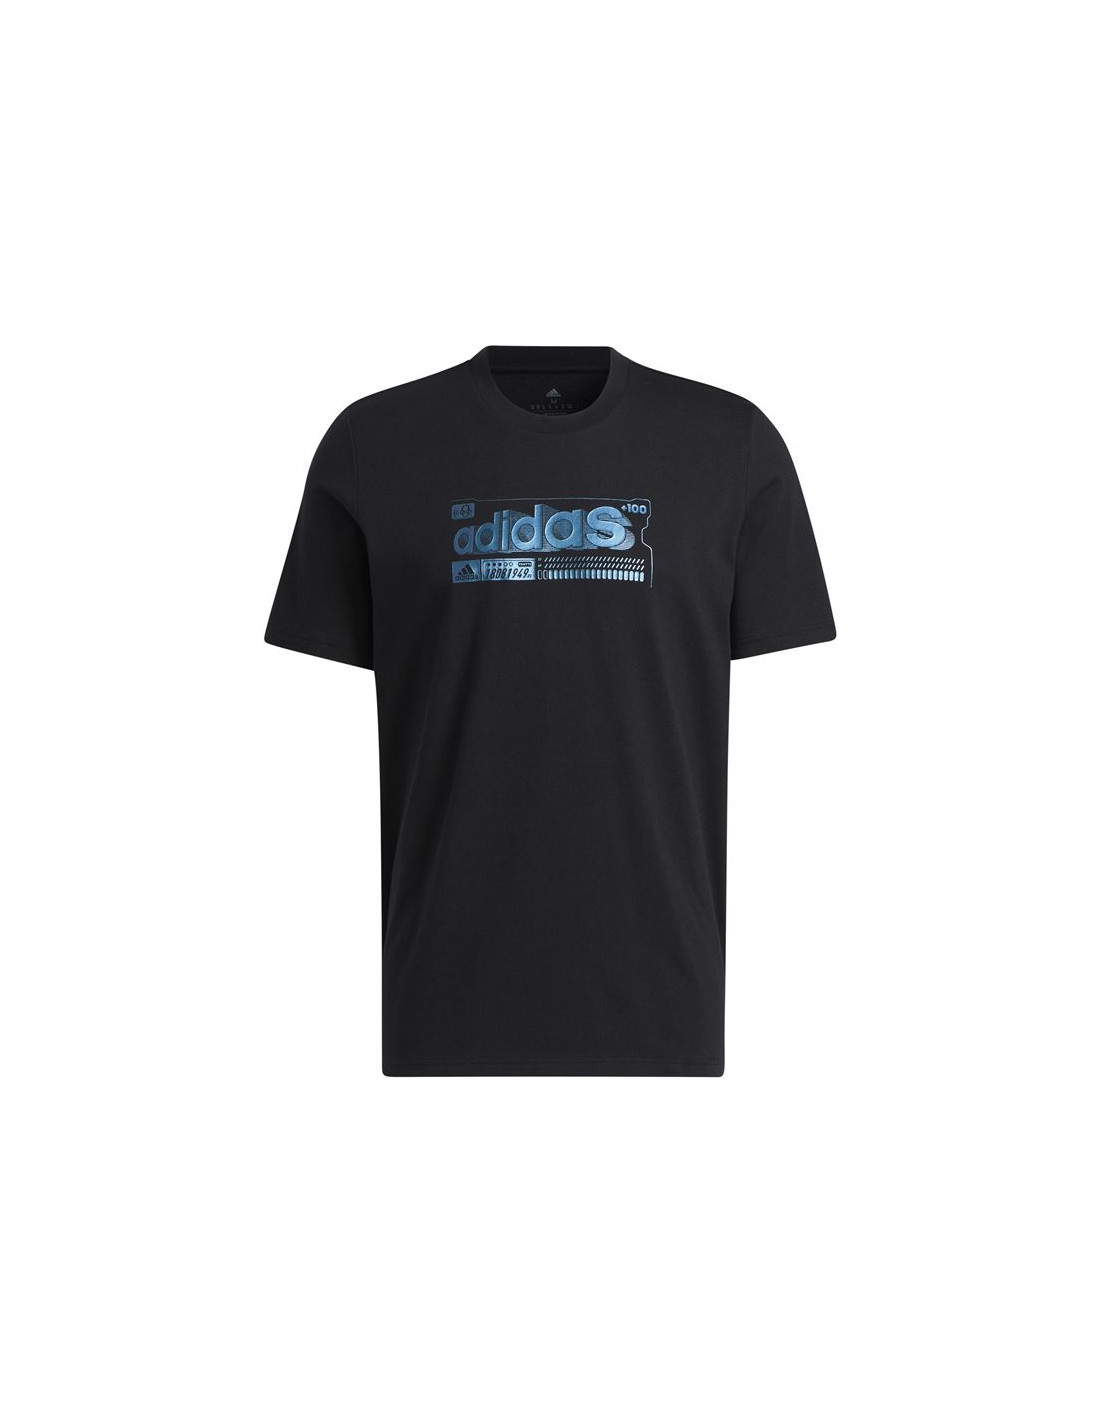 Camiseta adidas colorshift gaming hombre black